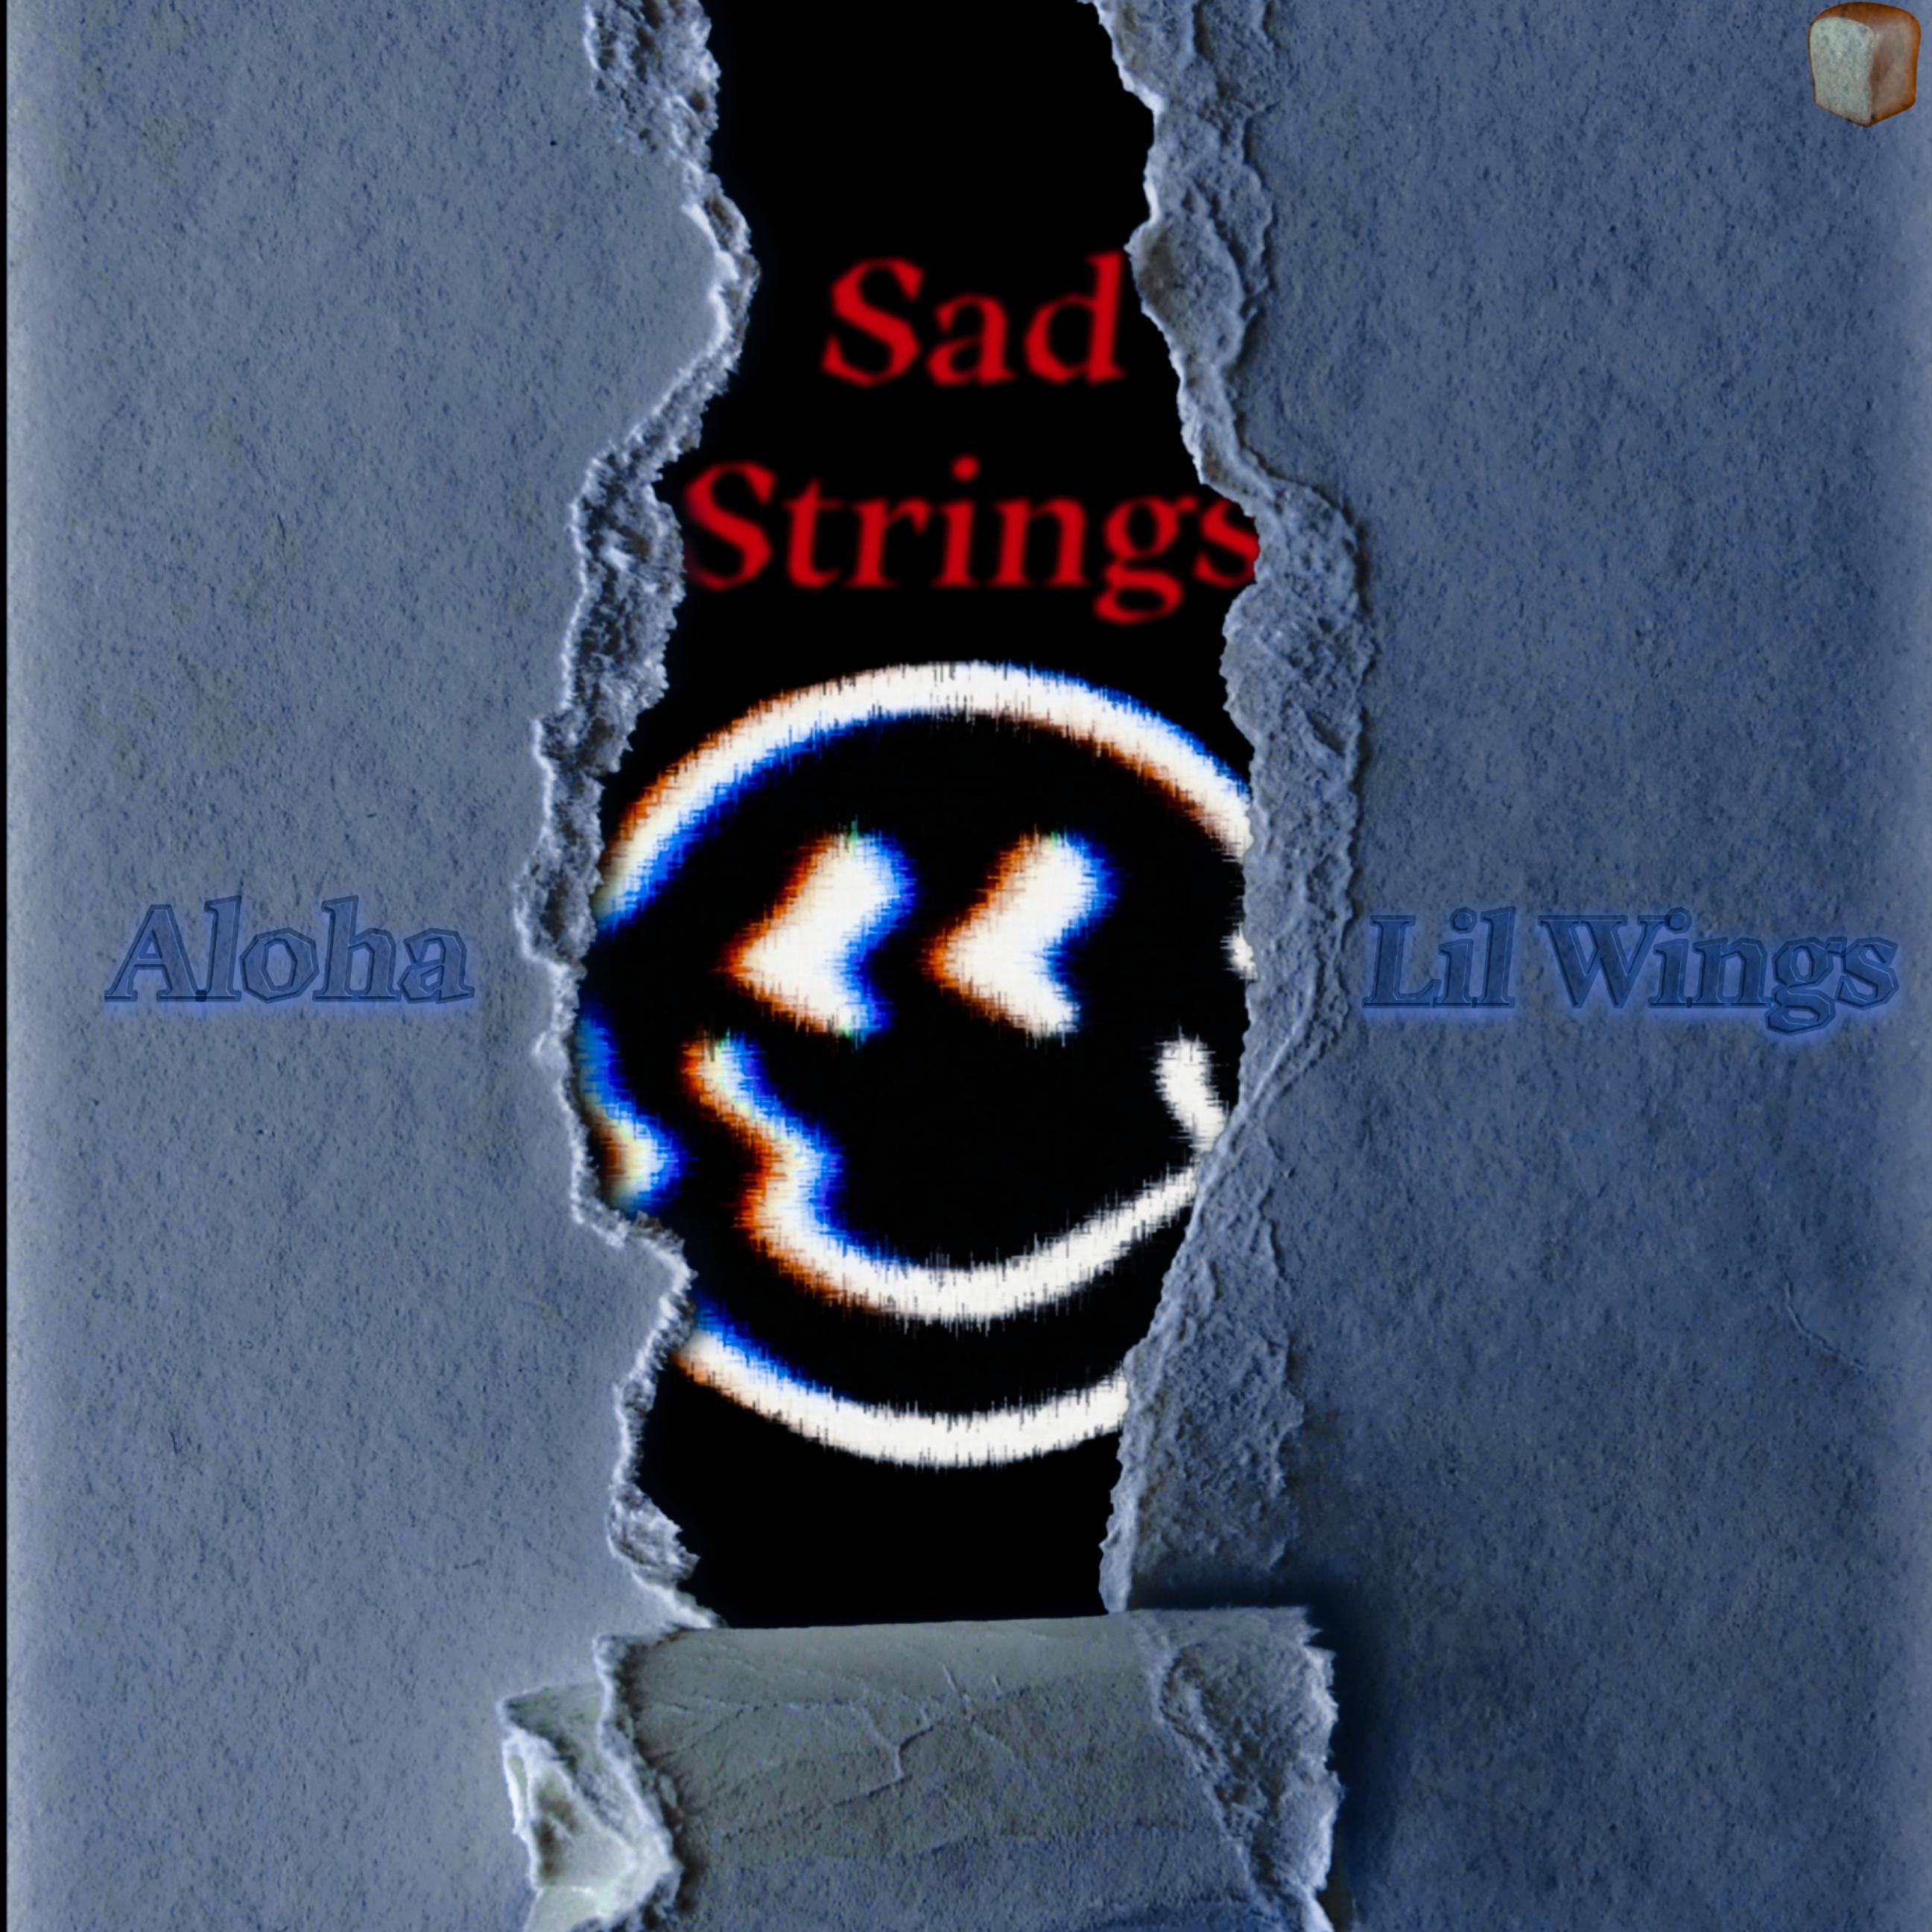 分开后Sad Strings歌词 歌手Alohafornow / LilWings小蔡同学 / Take Fire (褪火）-专辑分开后Sad Strings-单曲《分开后Sad Strings》LRC歌词下载